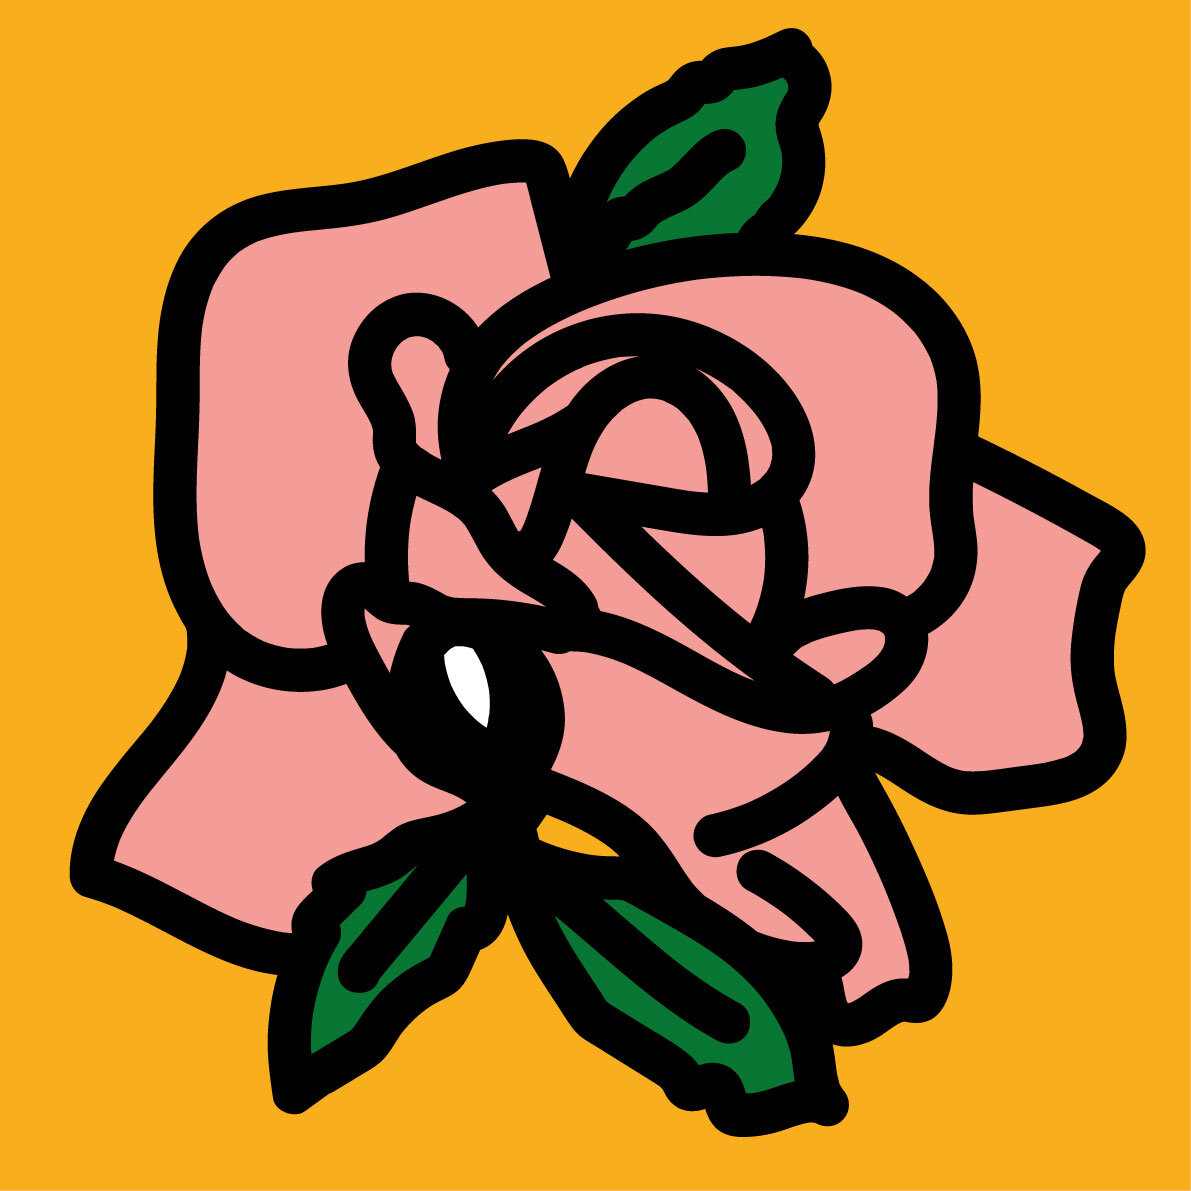 rose-2.jpg